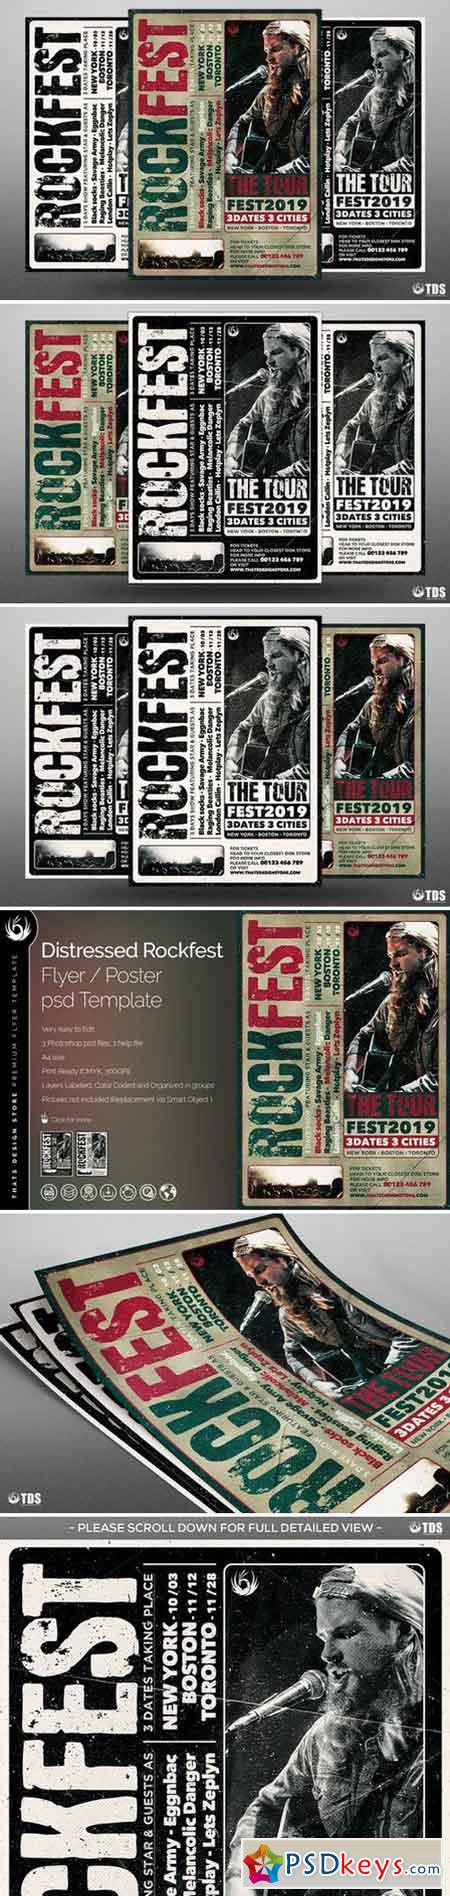 Distressed Rockfest Flyer Template 765746